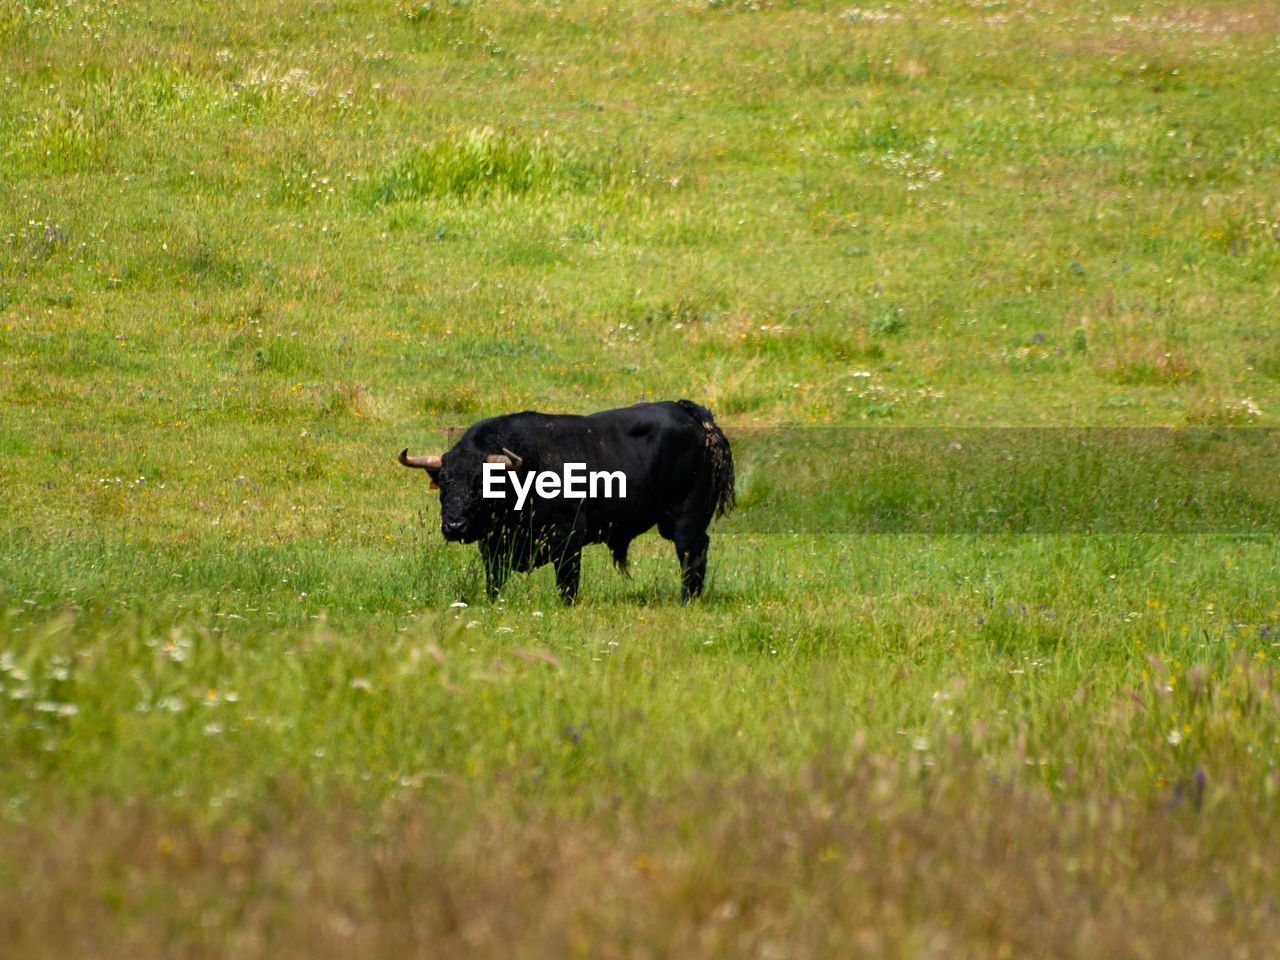 BLACK DOG LYING ON GRASS